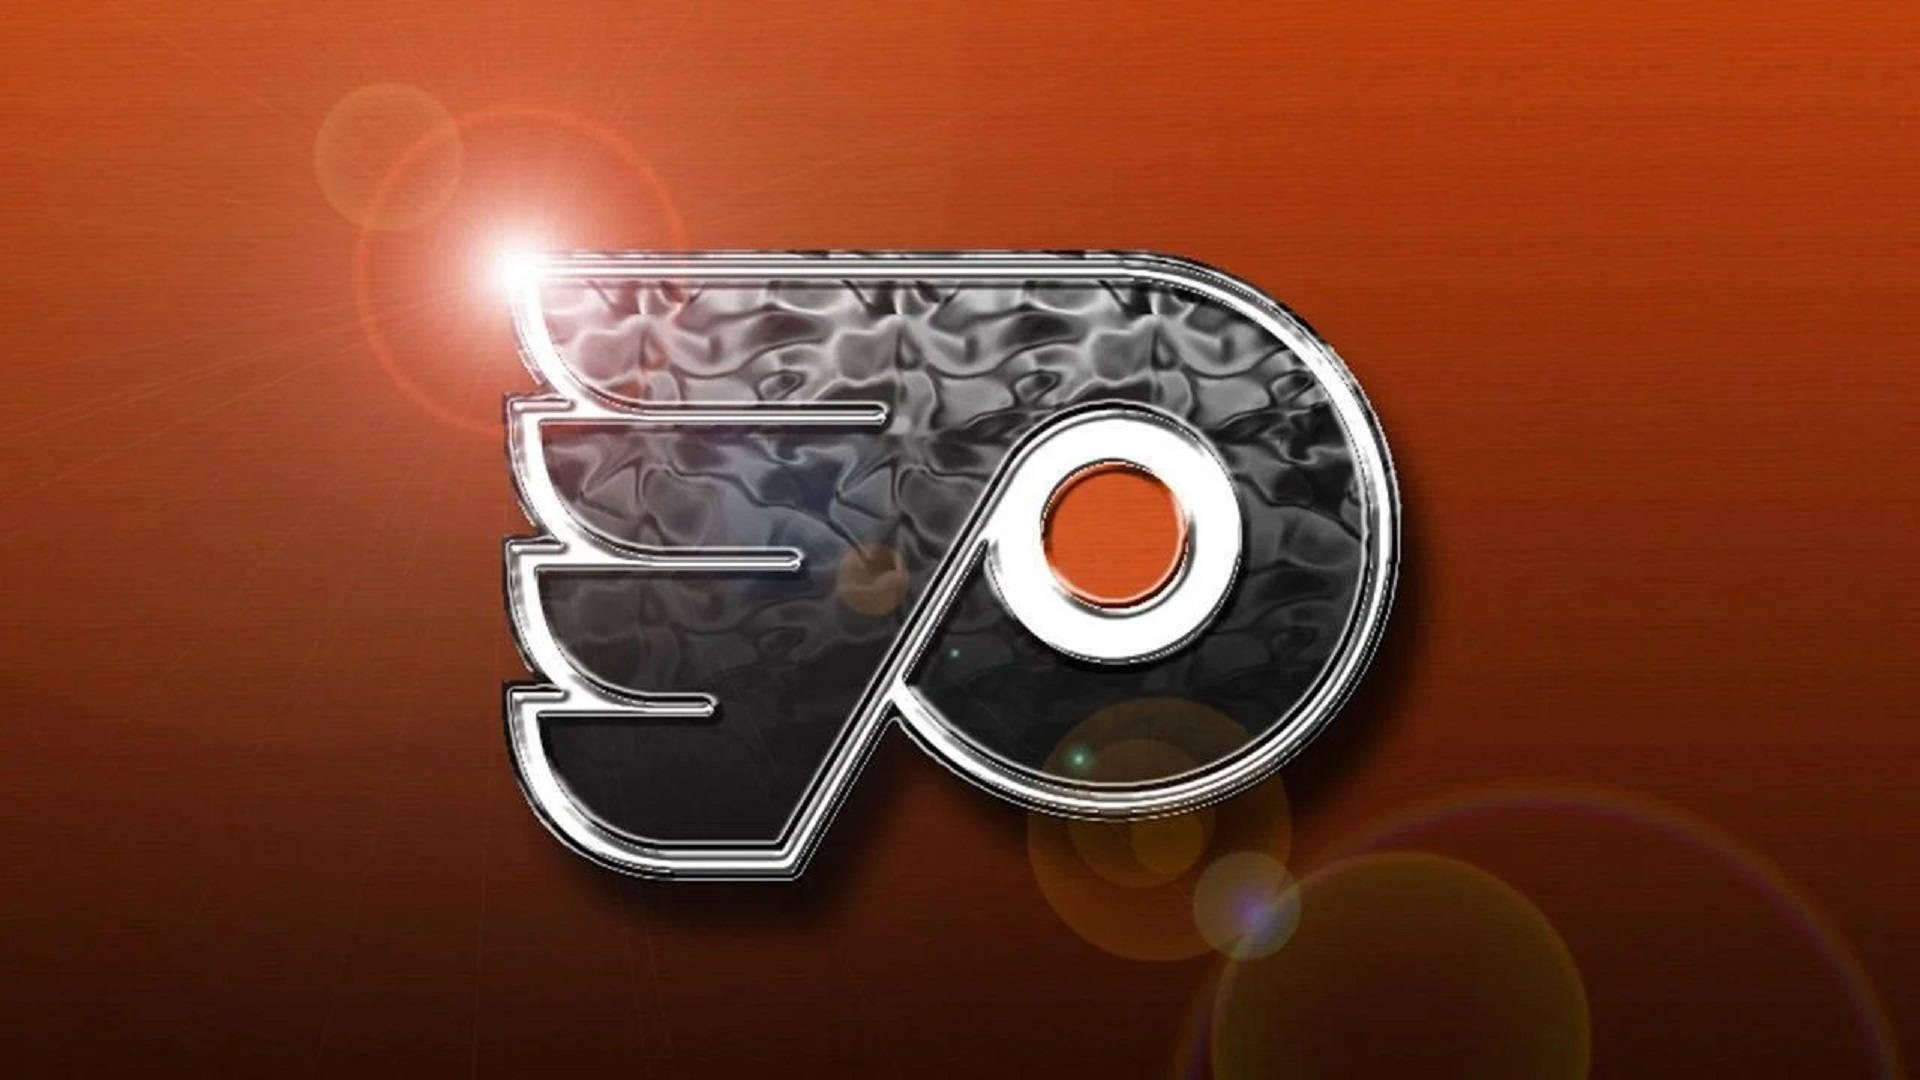 Philadelphia Flyers Backgrounds | ManyBackgrounds.com